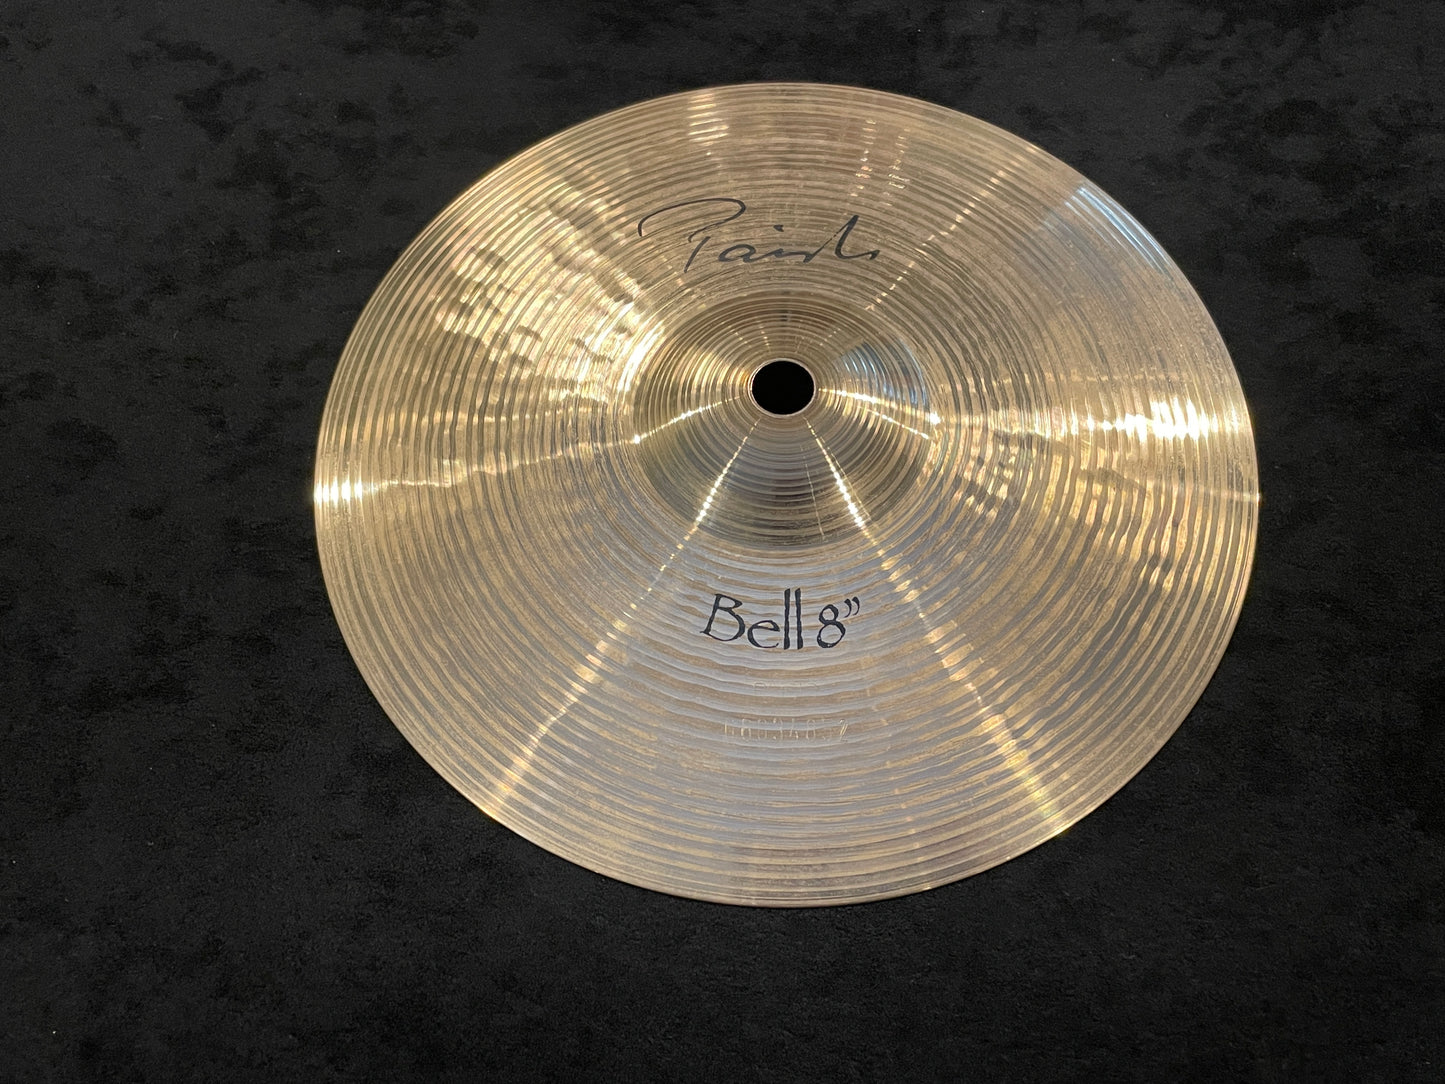 8" Paiste Signature Bell Cymbal 412g